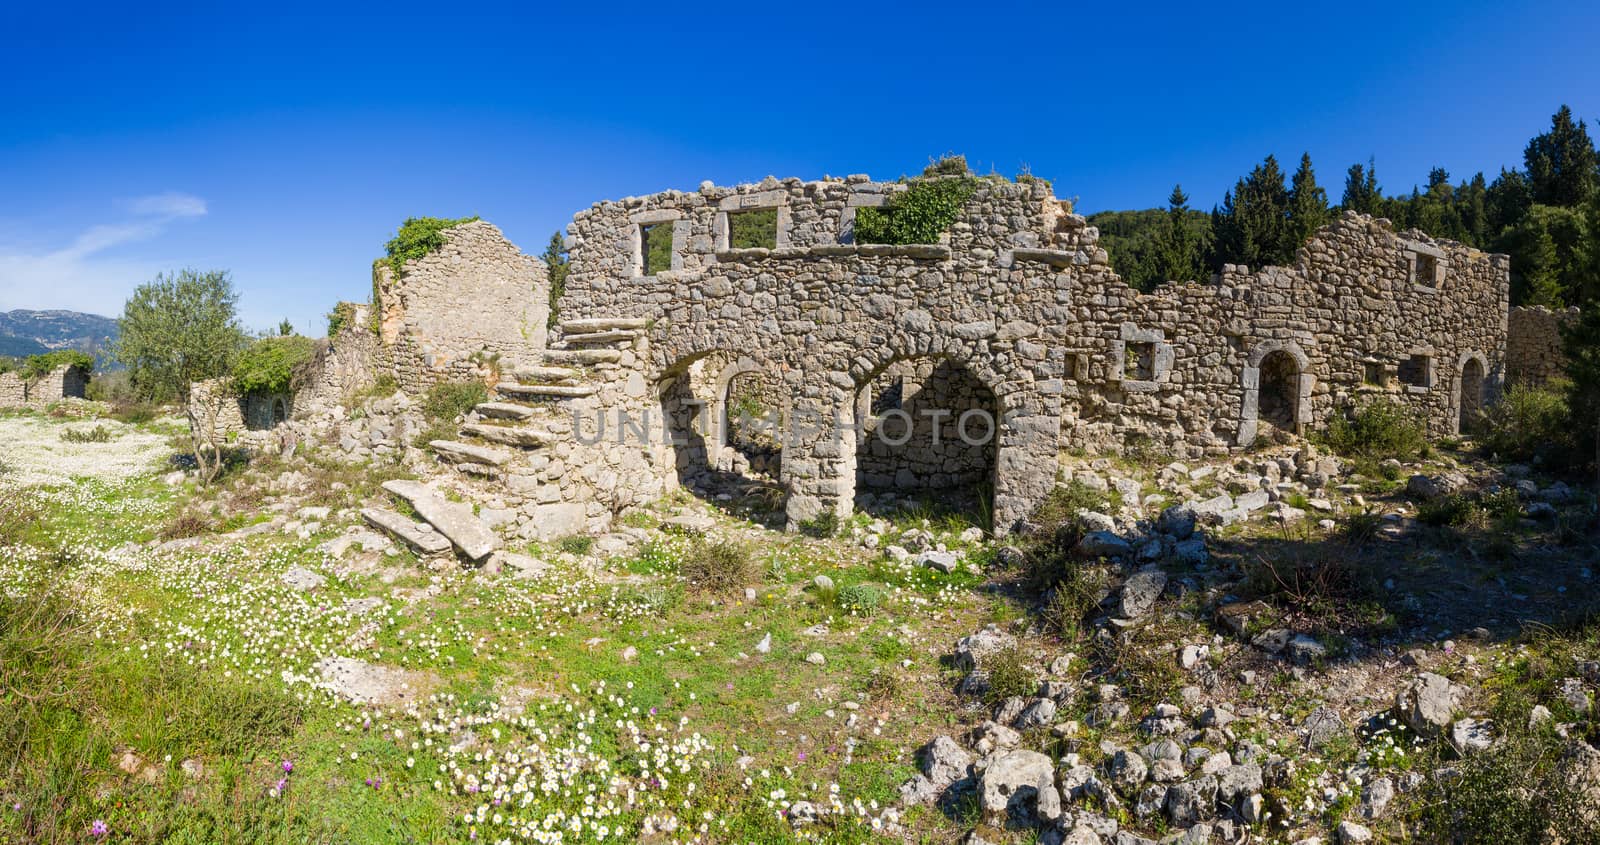 The castle of Lefkada in Greece